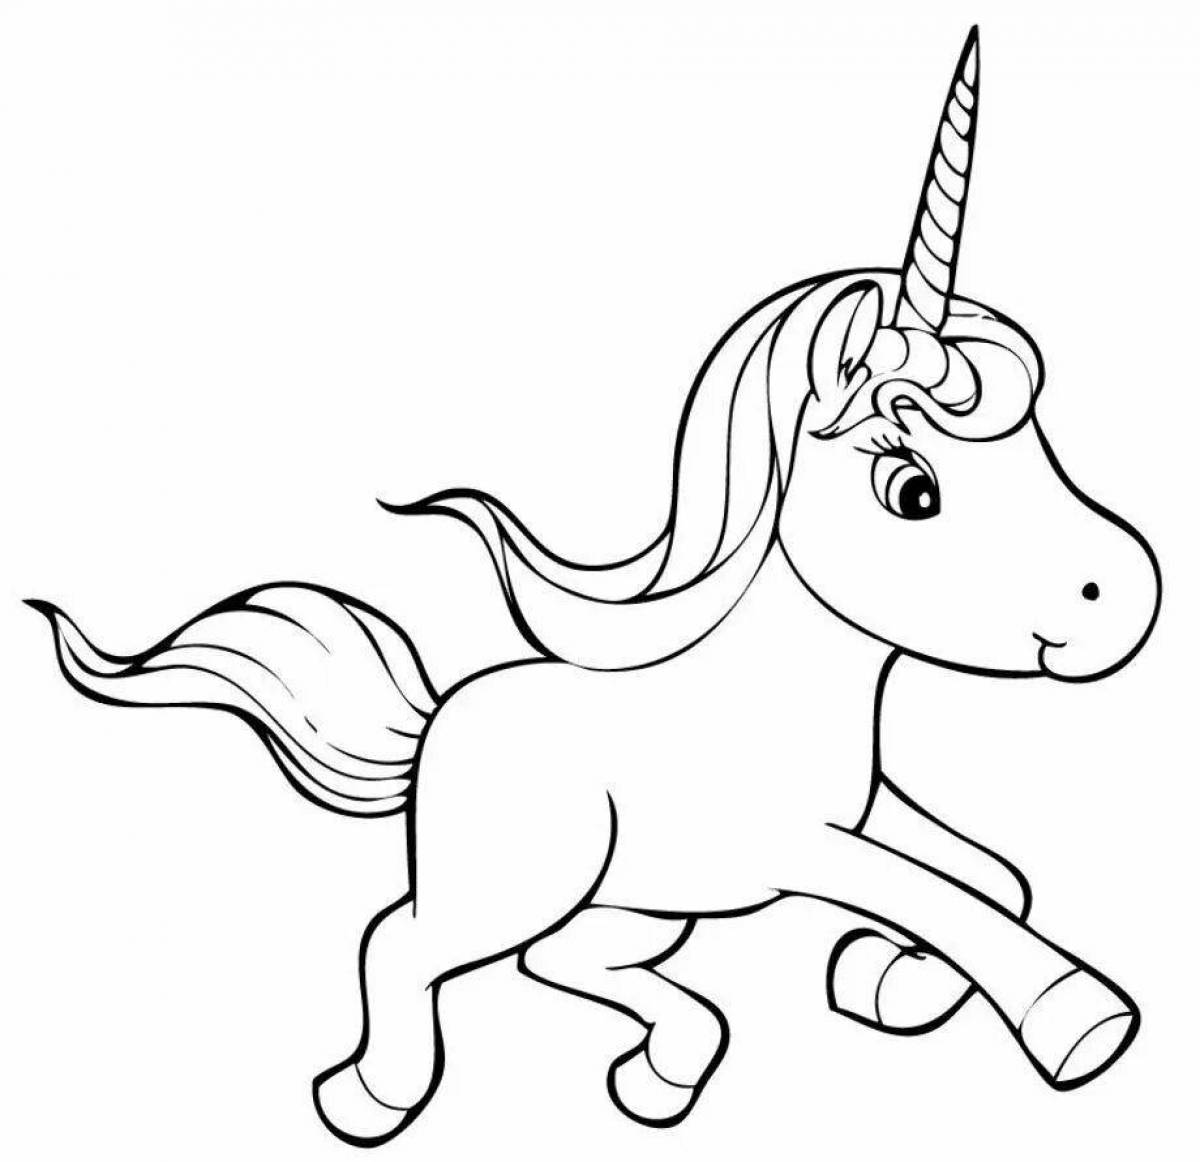 A wonderful coloring simple unicorn